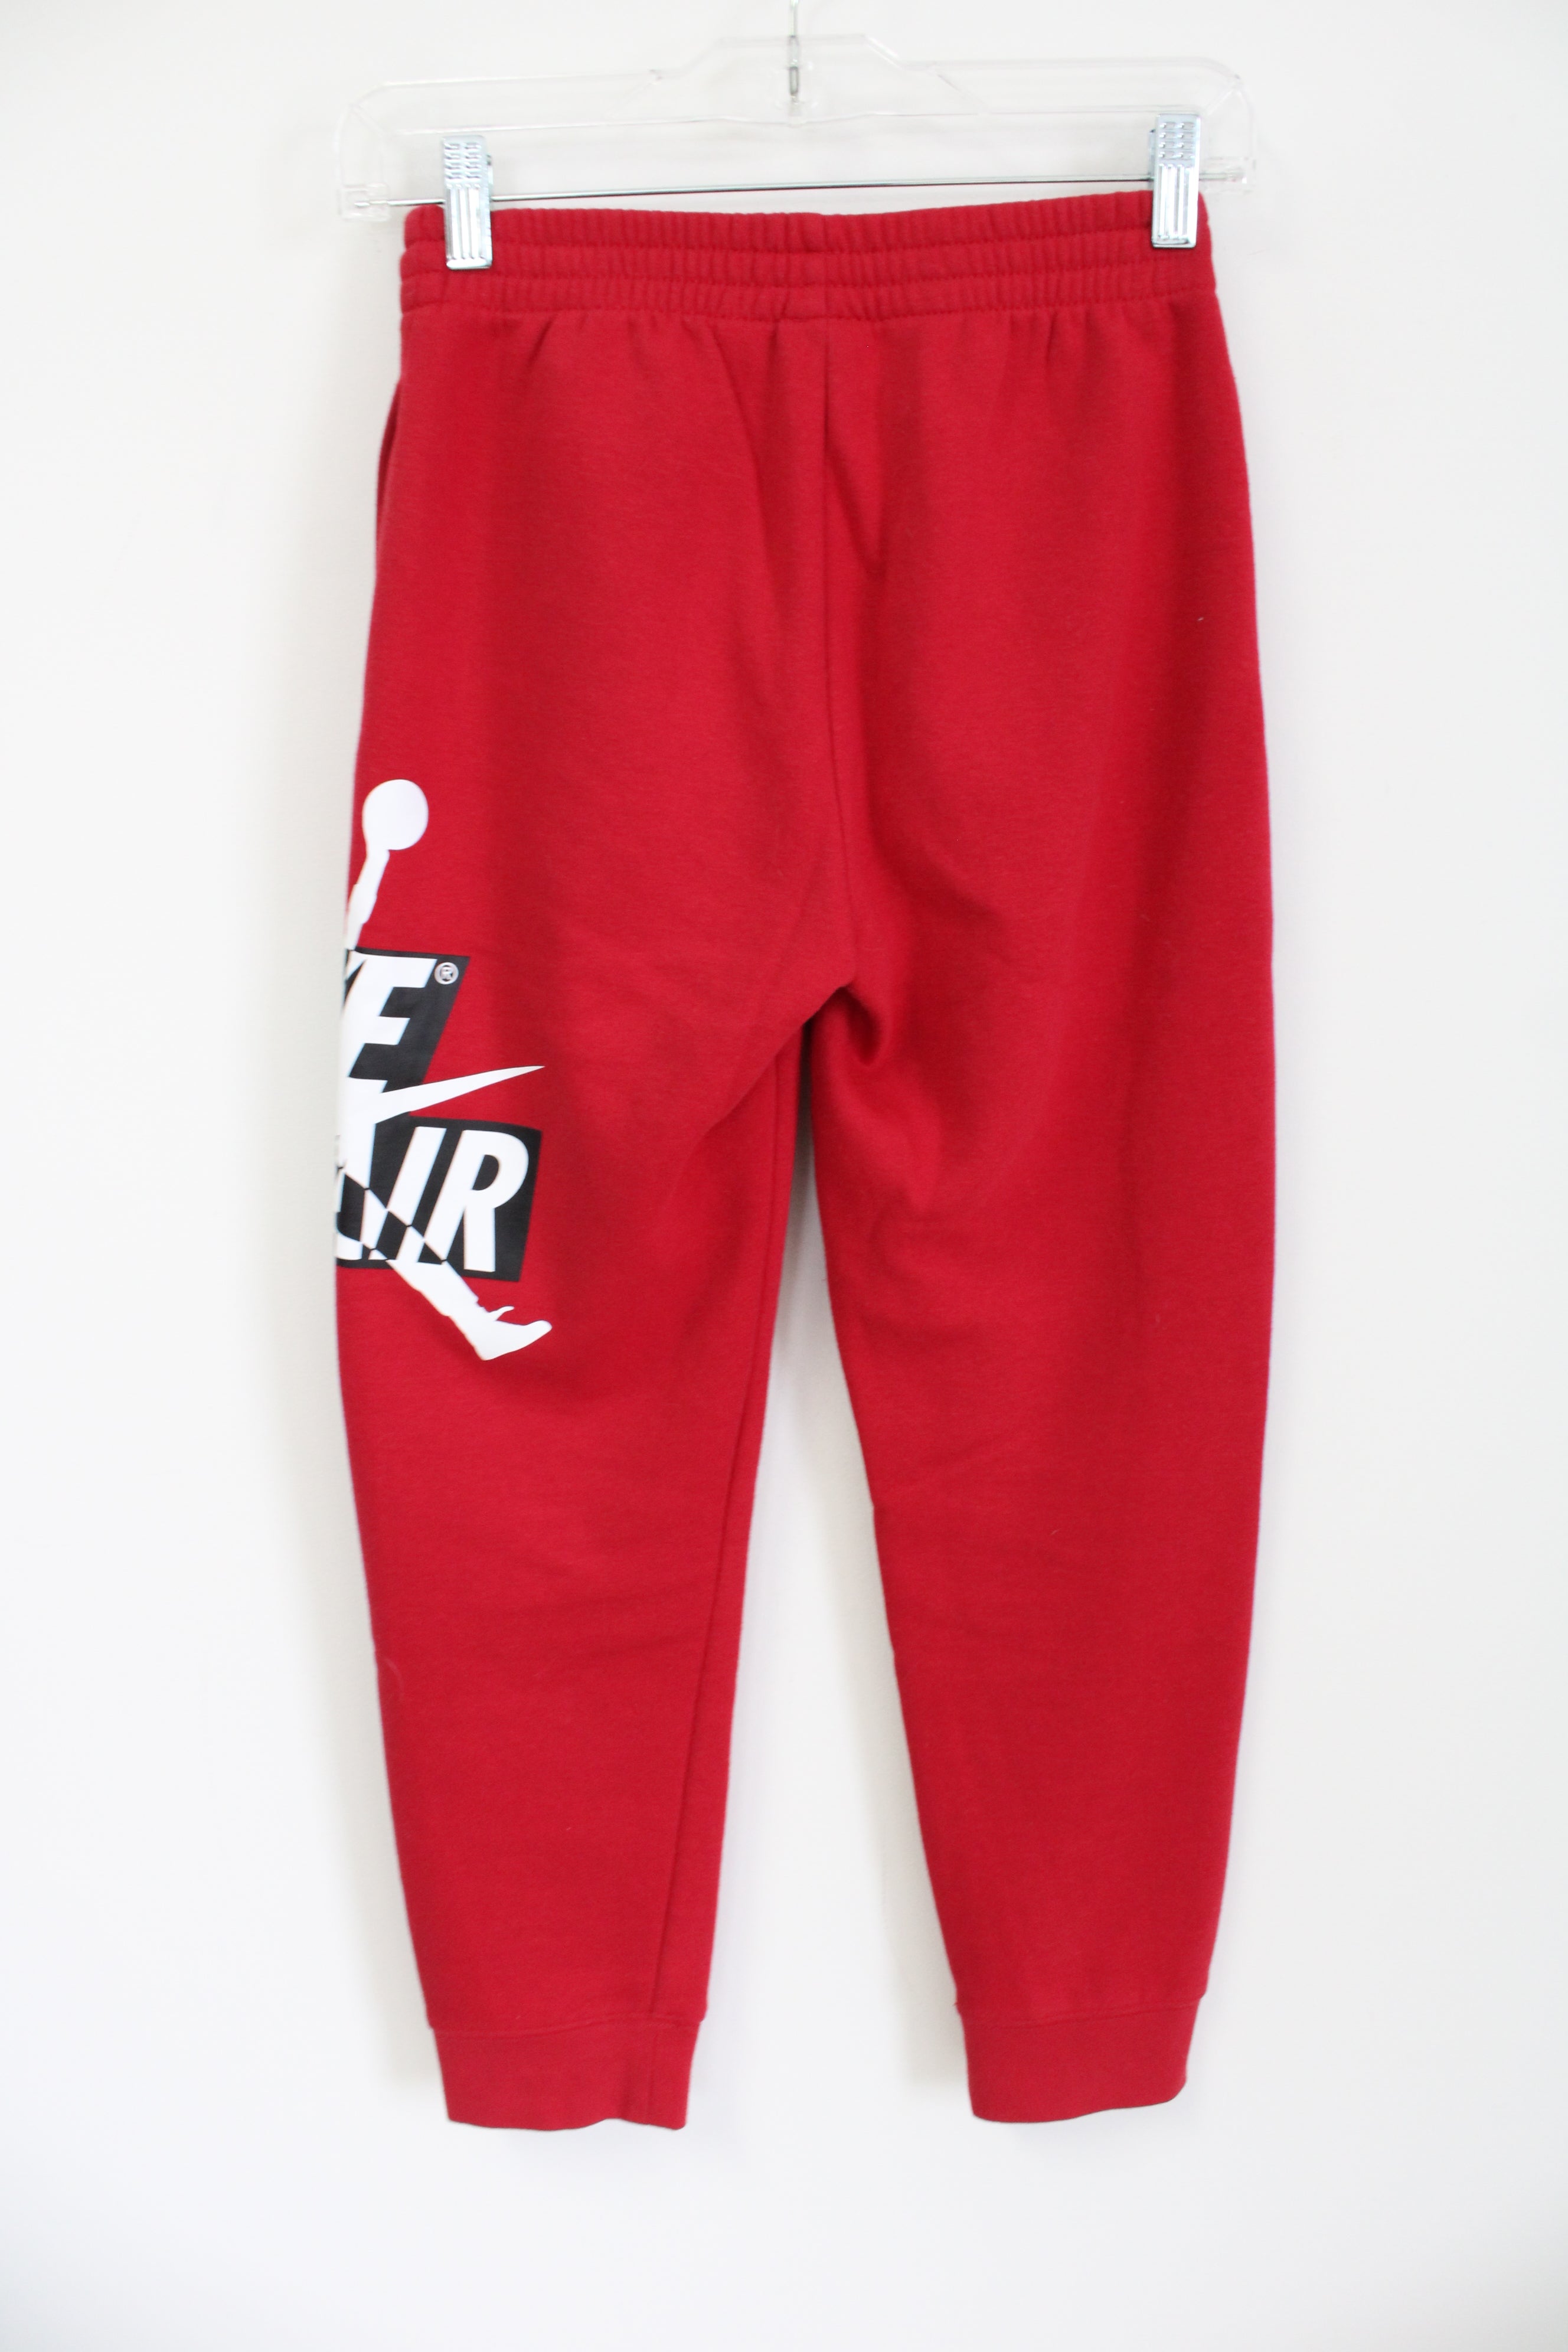 Nike air Jordan Red Fleece Lined Jogger Pants | Youth M (10/12)